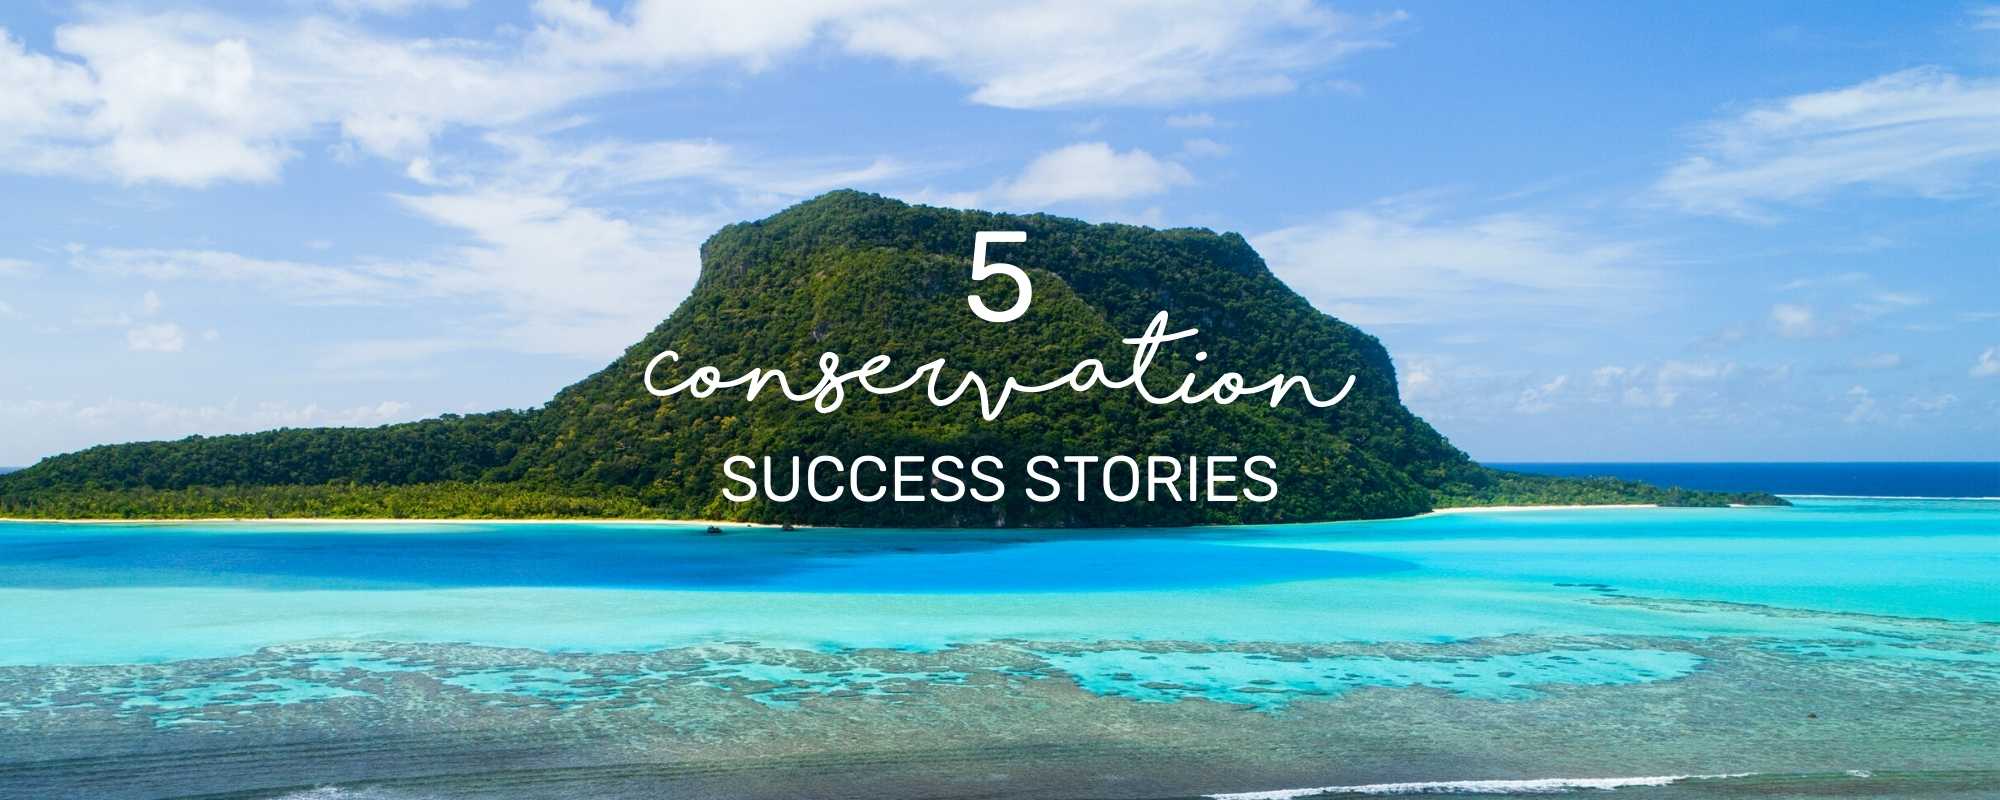 5 CONSERVATION SUCCESS STORIES